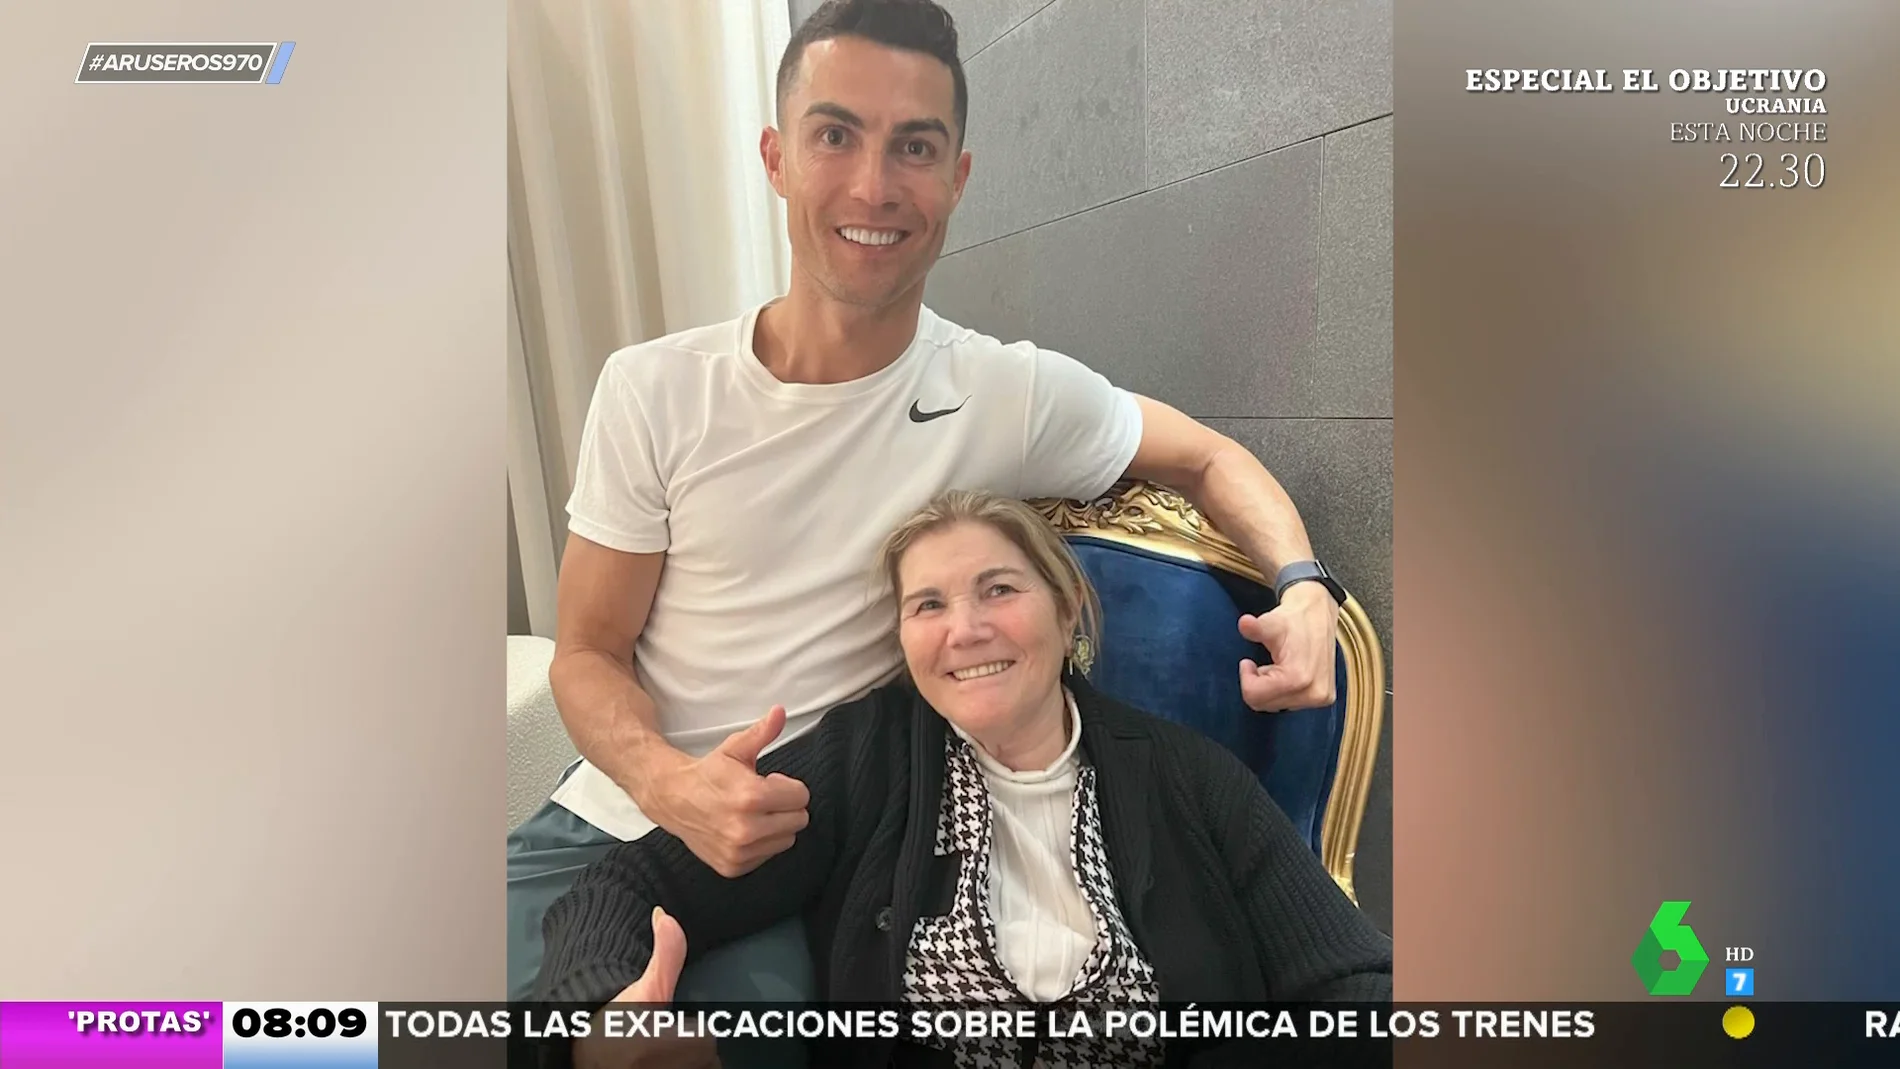 Georgina hace las paces (por fin) con la madre de Cristiano Ronaldo